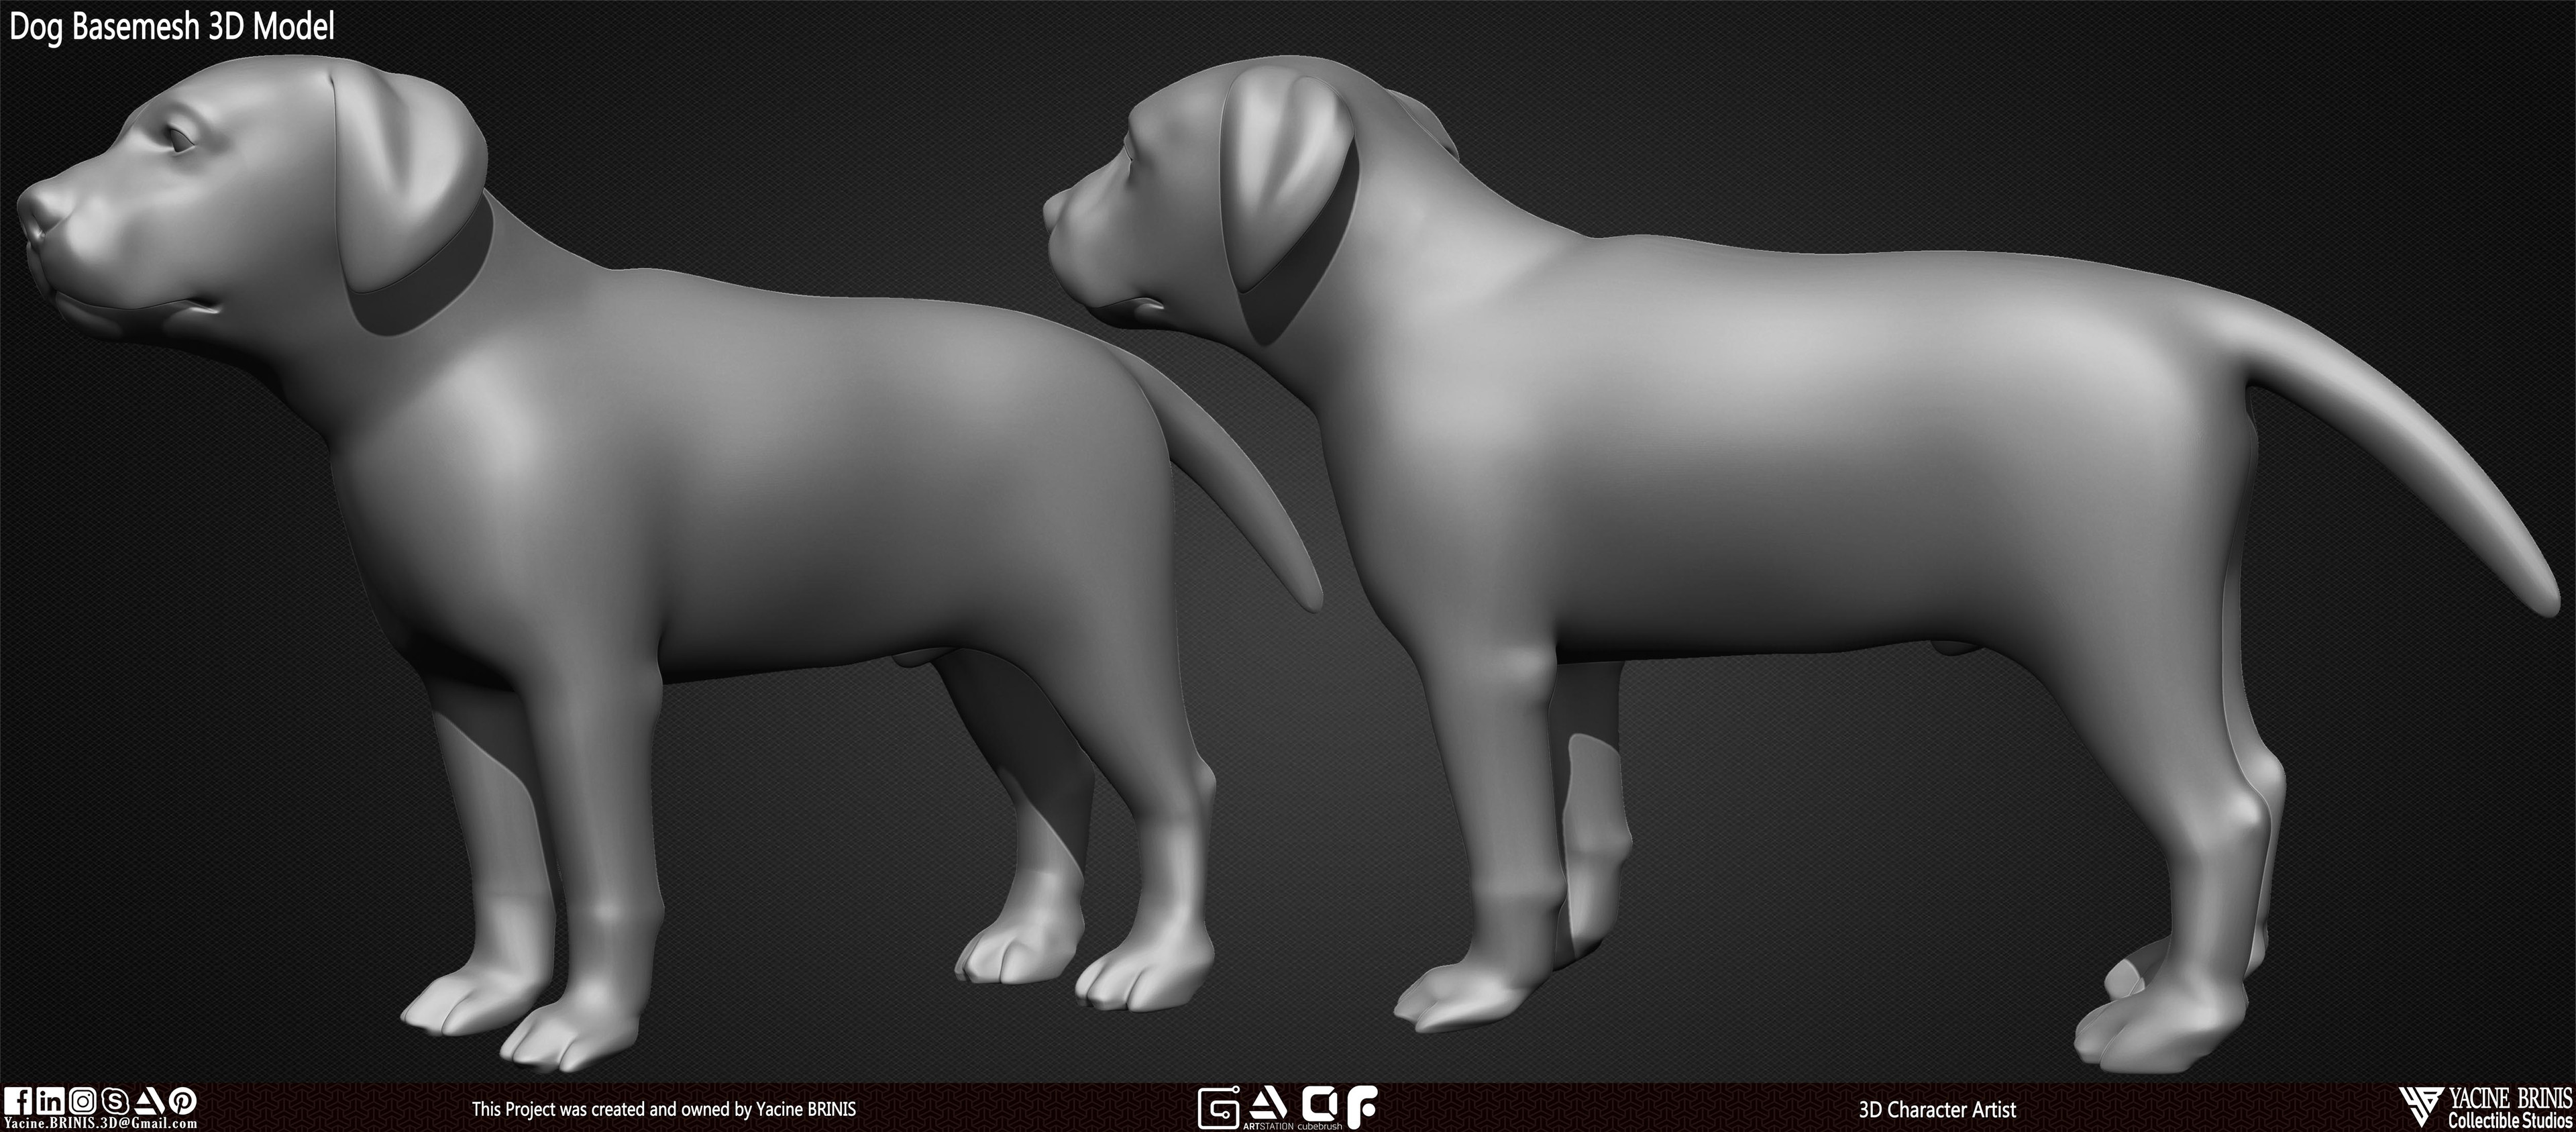 Dog Basemesh 3D Model Vol 01 sculpted By Yacine BRINIS Set 004